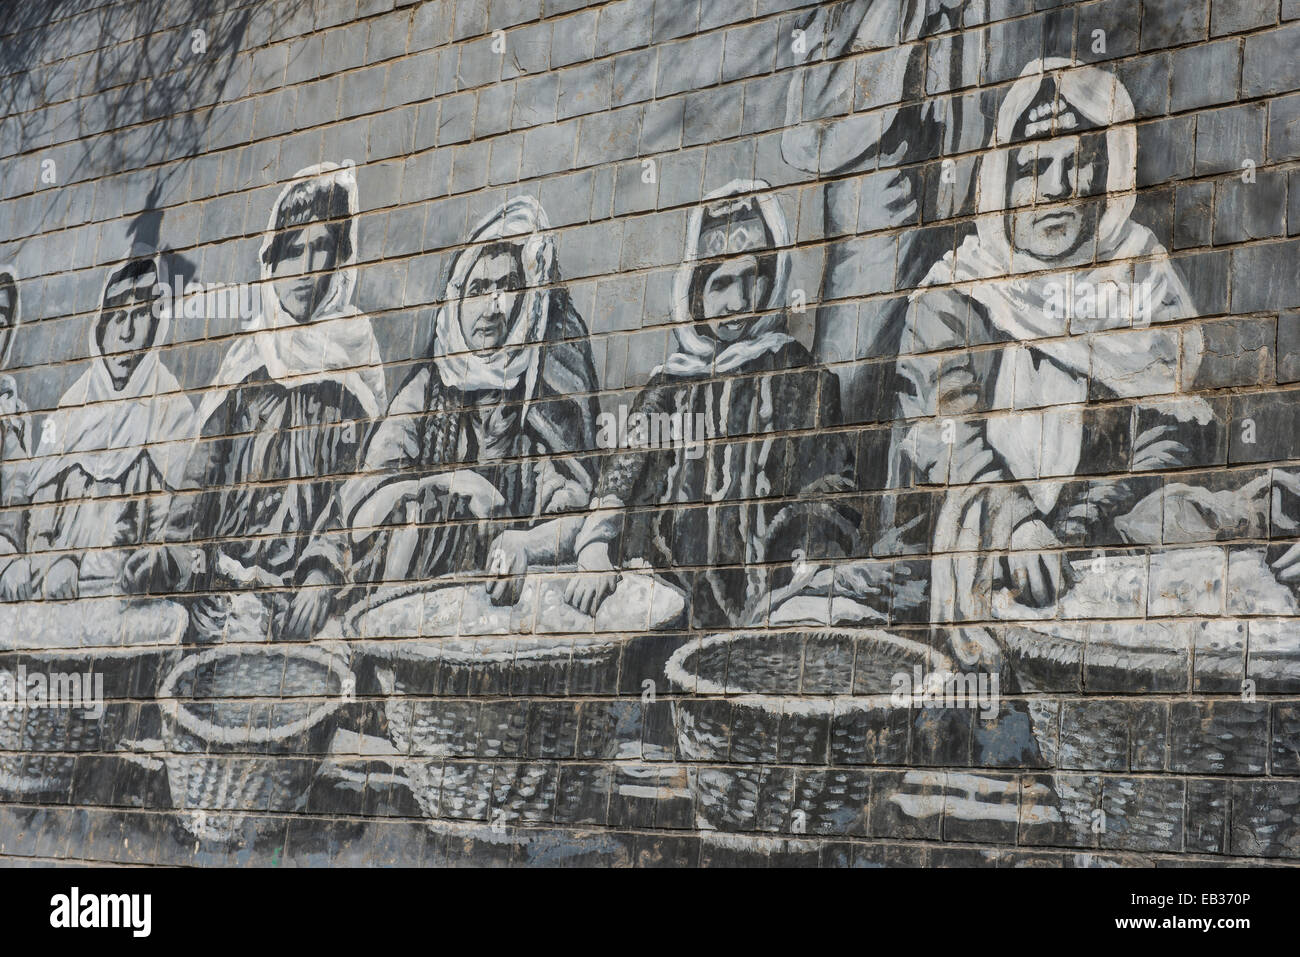 Peinture murale kurde, Sulaymaniyah, Kurdistan irakien, l'Irak Banque D'Images